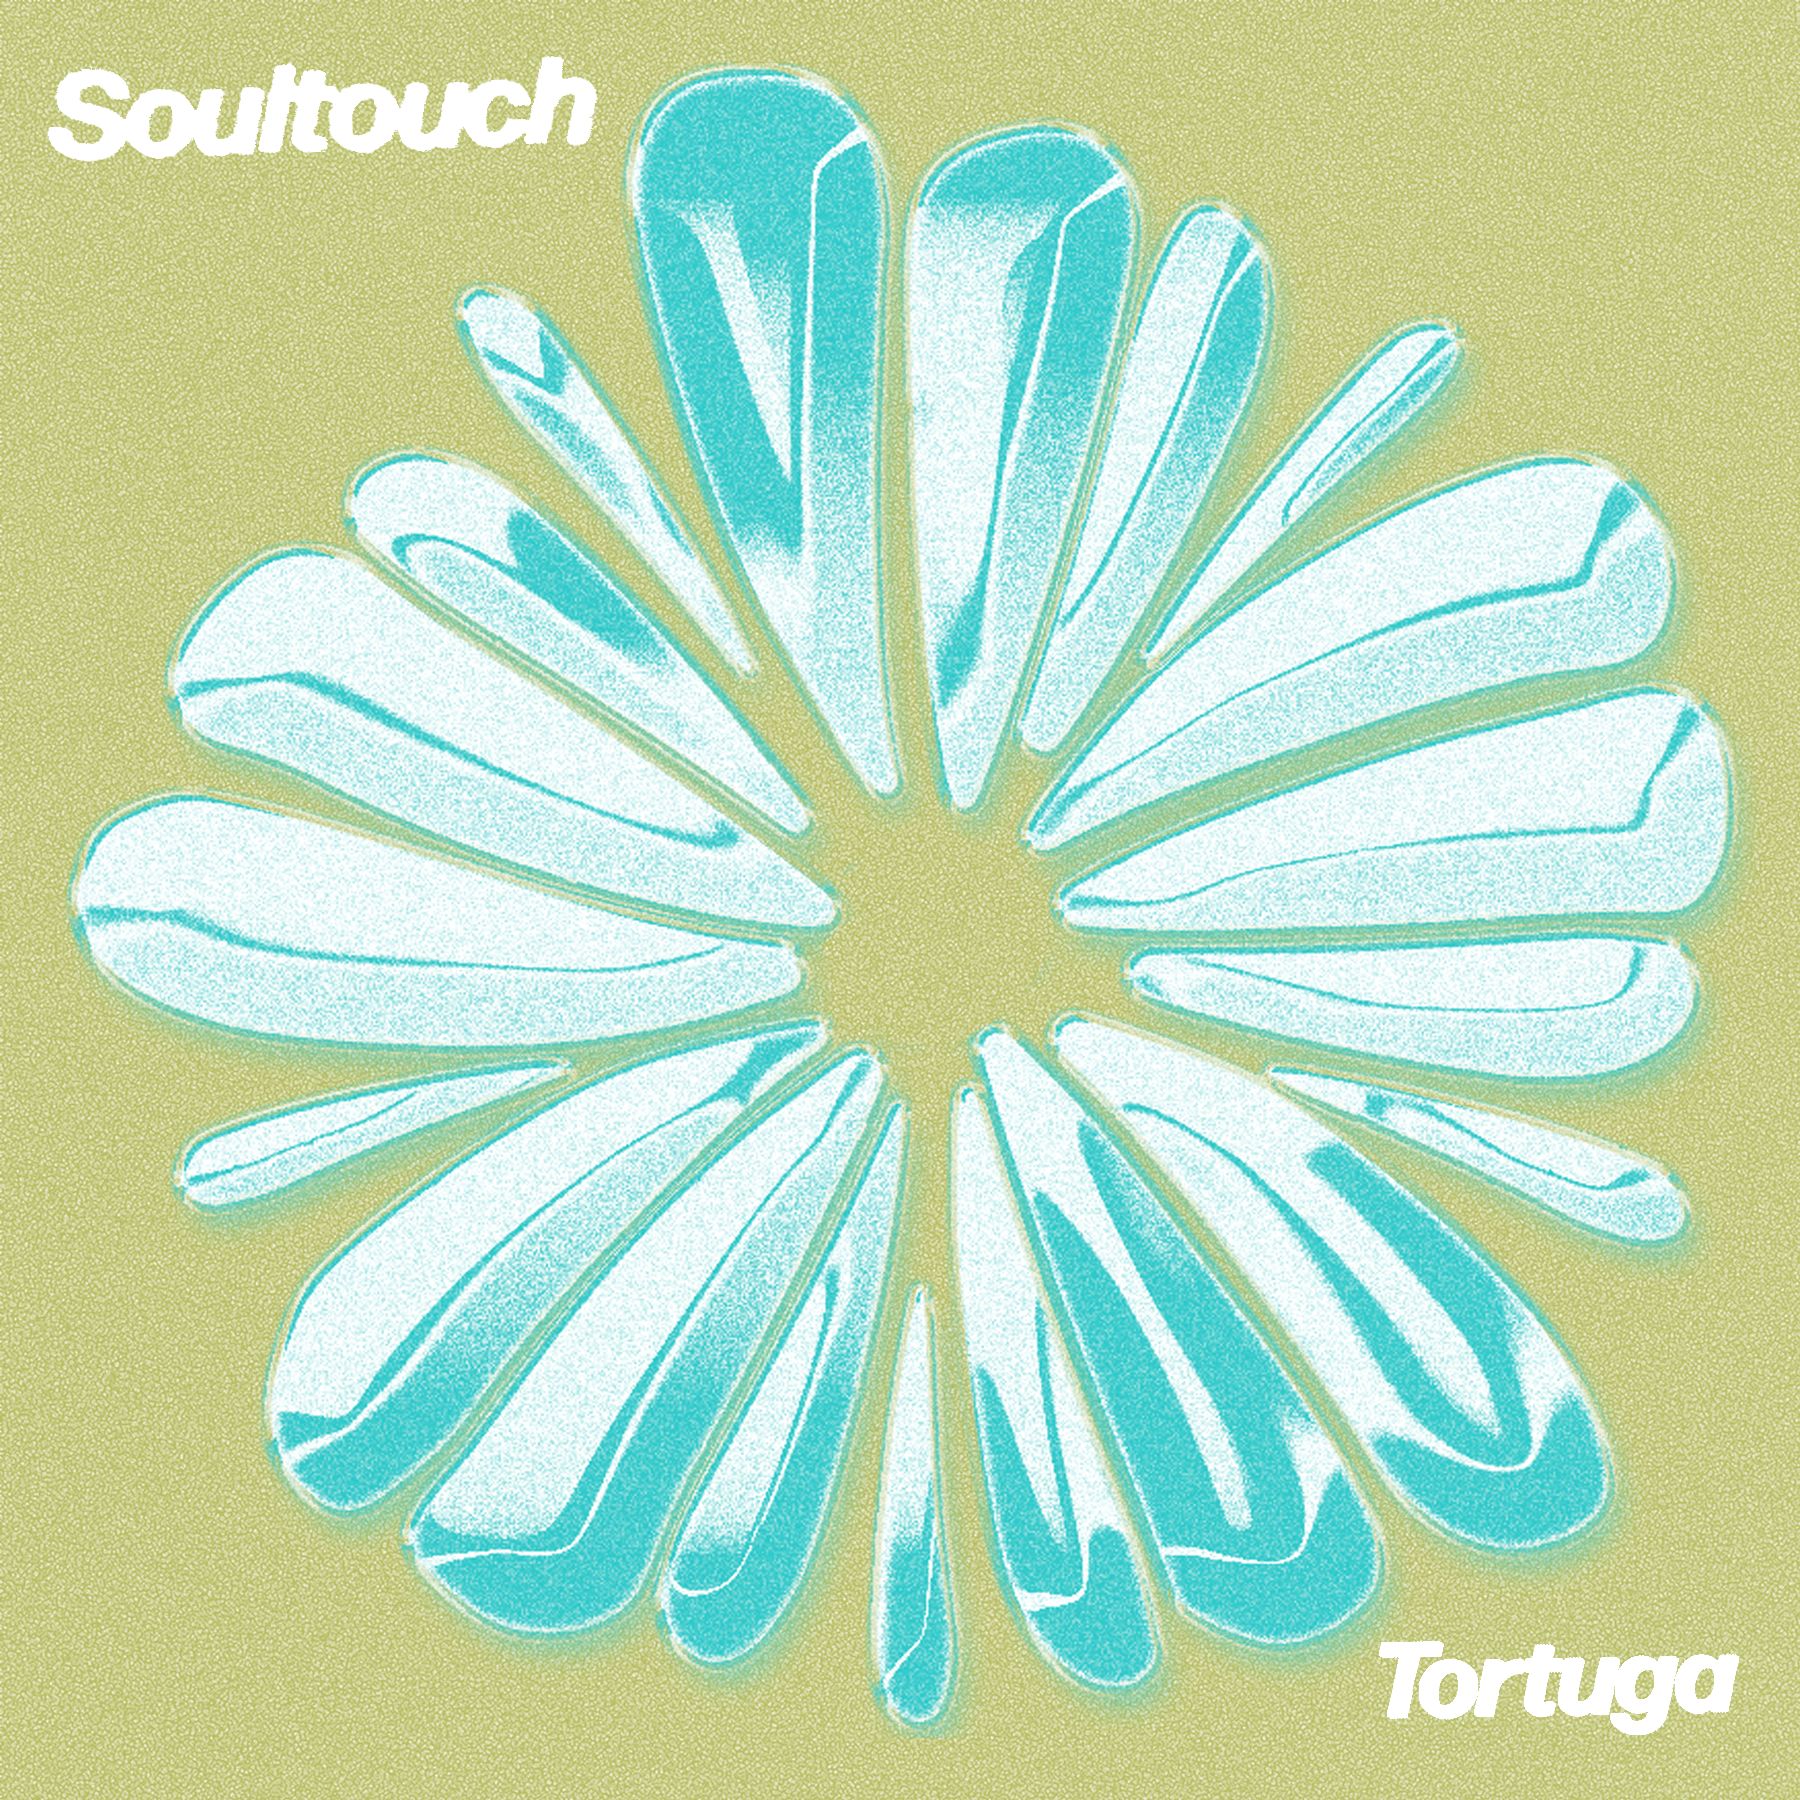 Sii mai PREMIERE : Tortuga - Soultouch